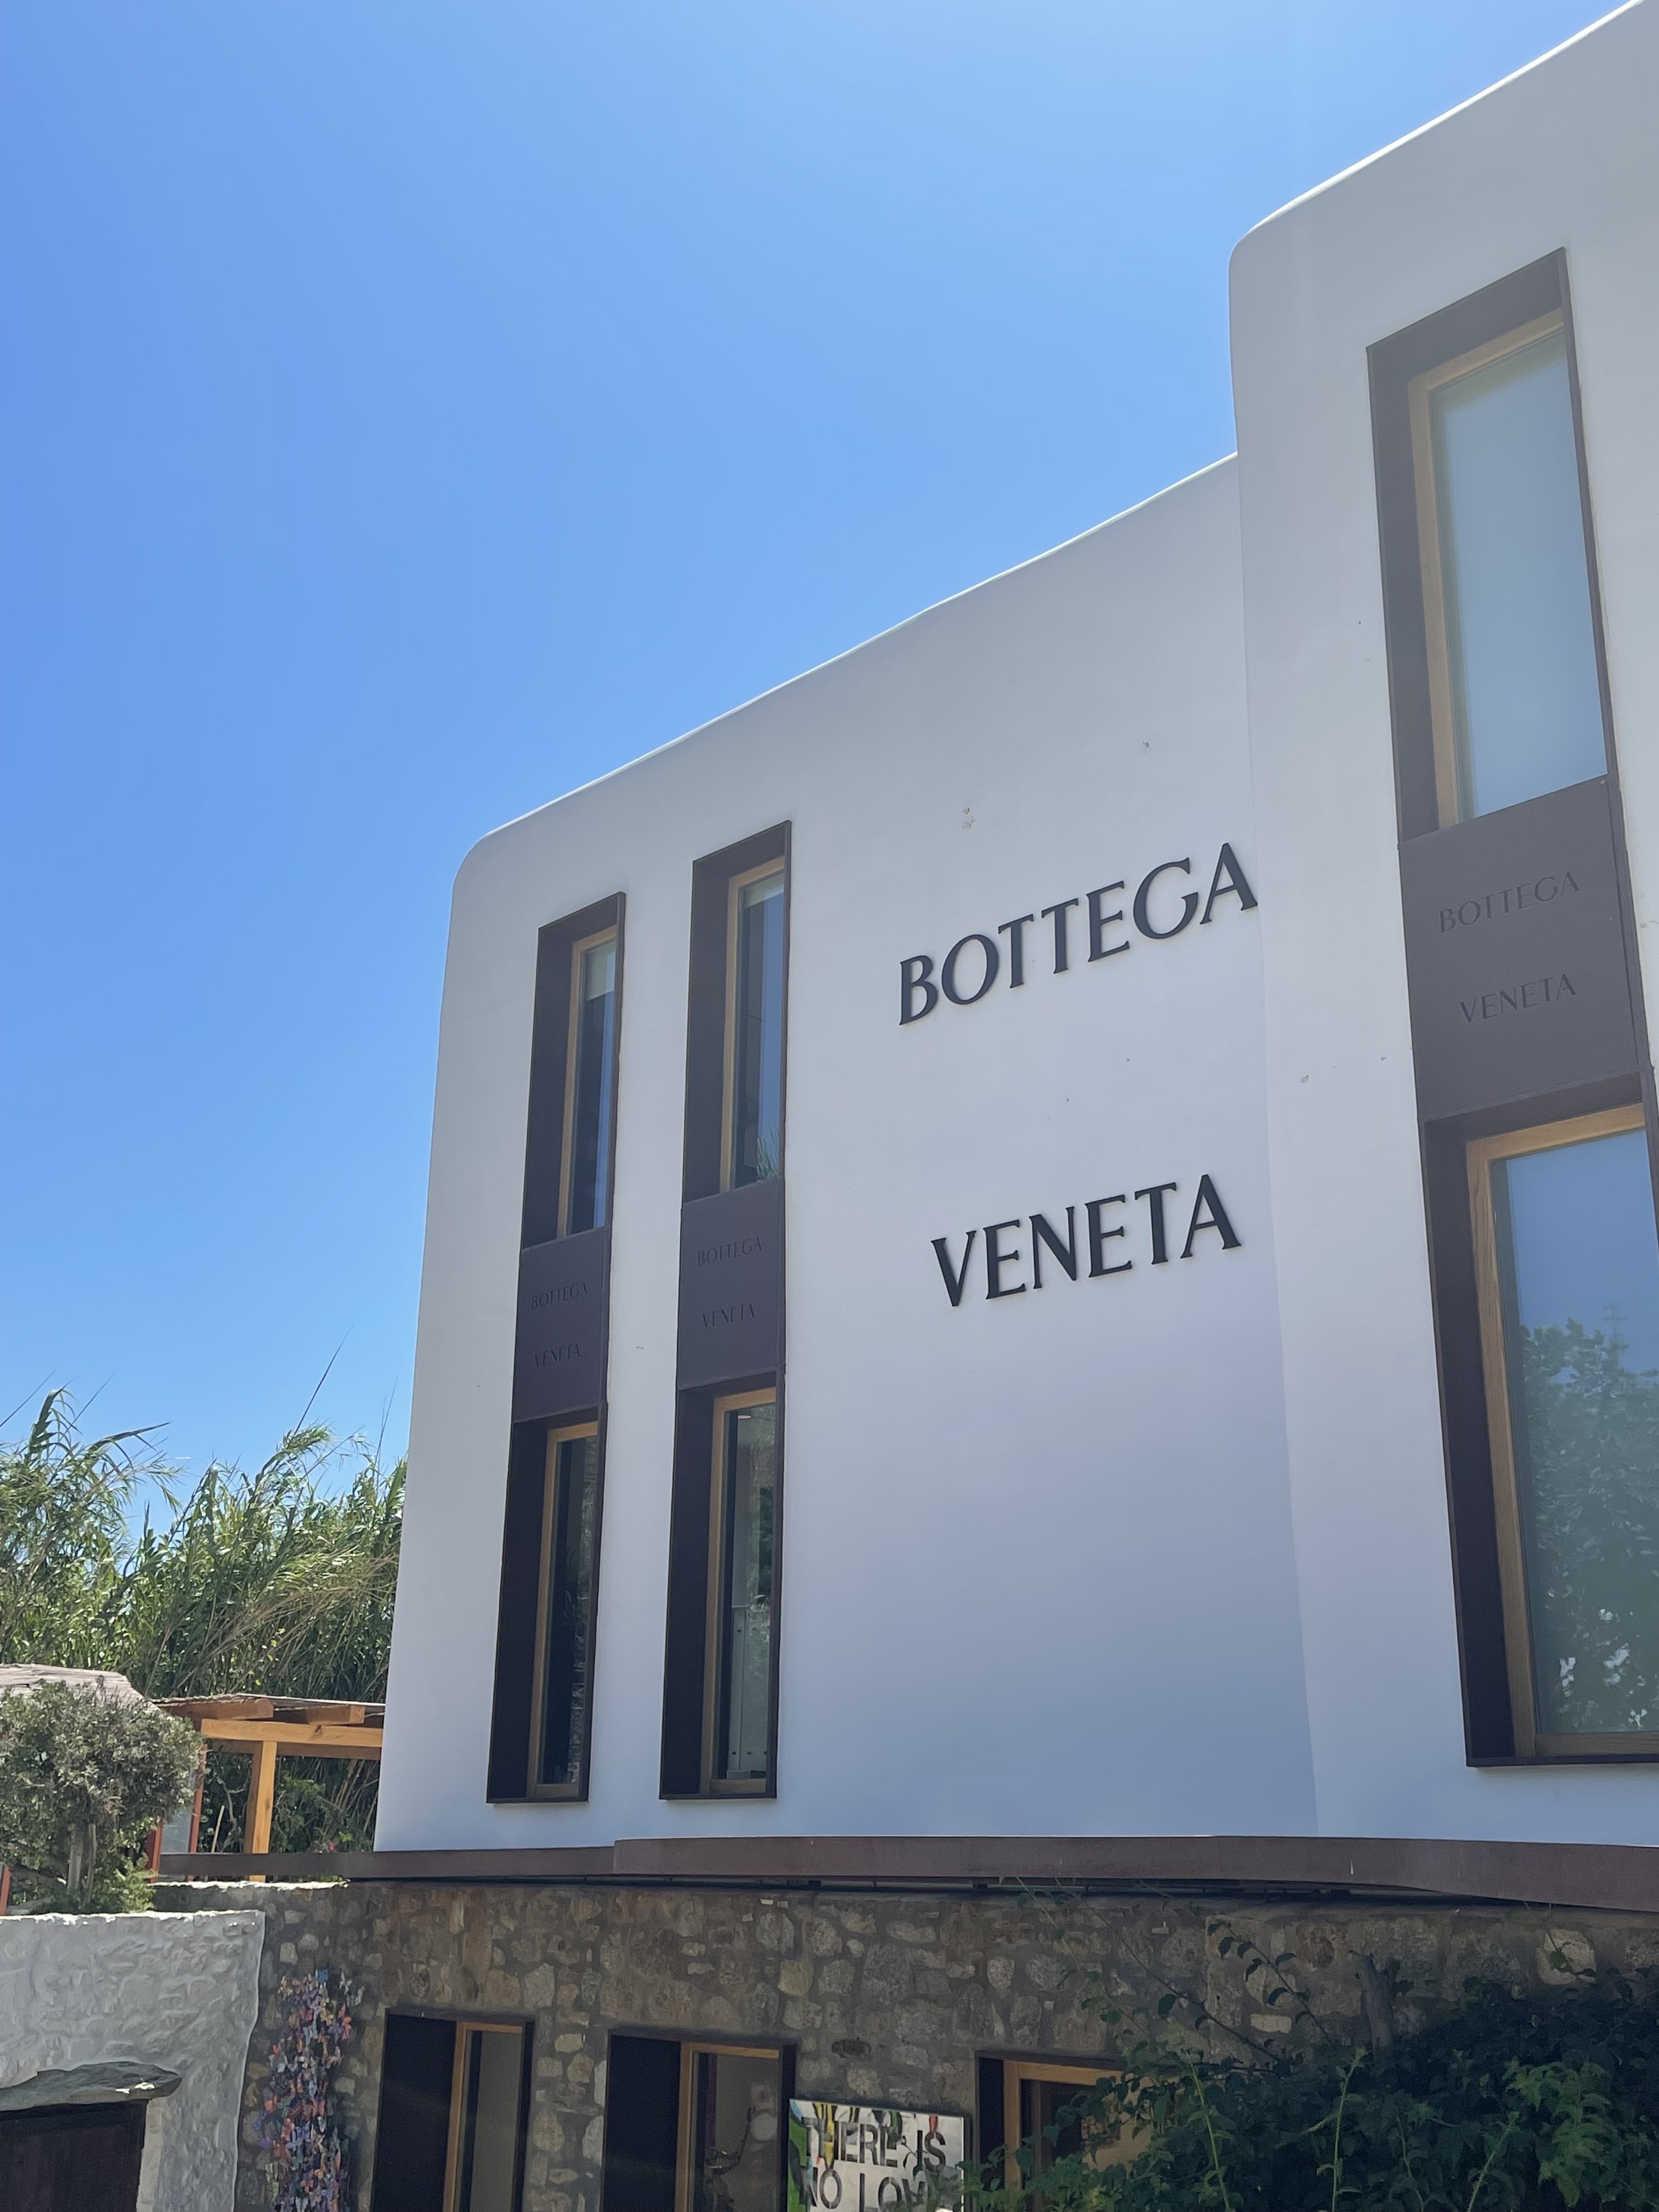 Bottega Veneta Celebrates Italy's Design History for Winter 2023